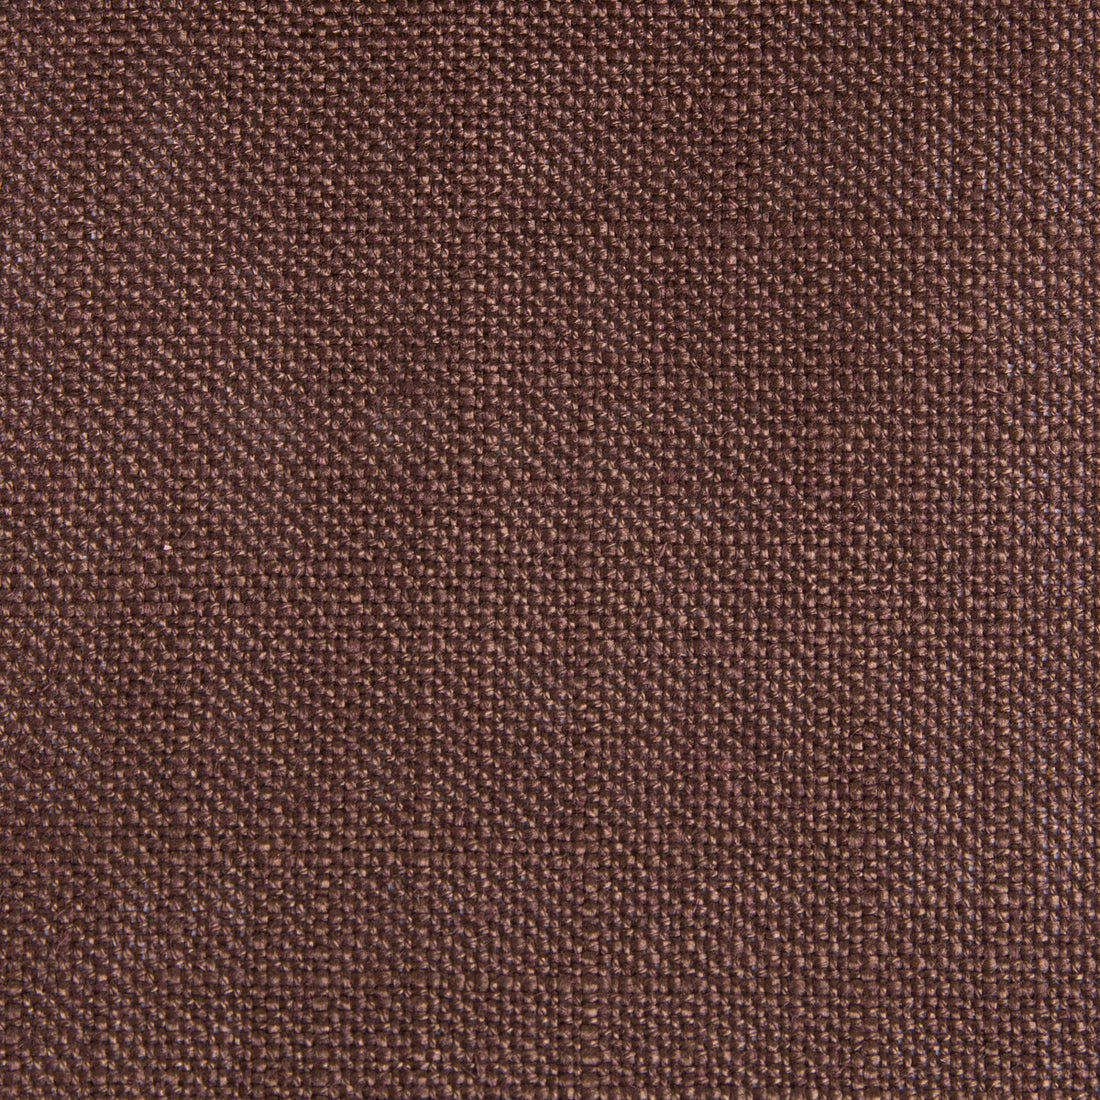 Peru fabric in castano color - pattern GDT5548.023.0 - by Gaston y Daniela in the Gaston Nuevo Mundo collection